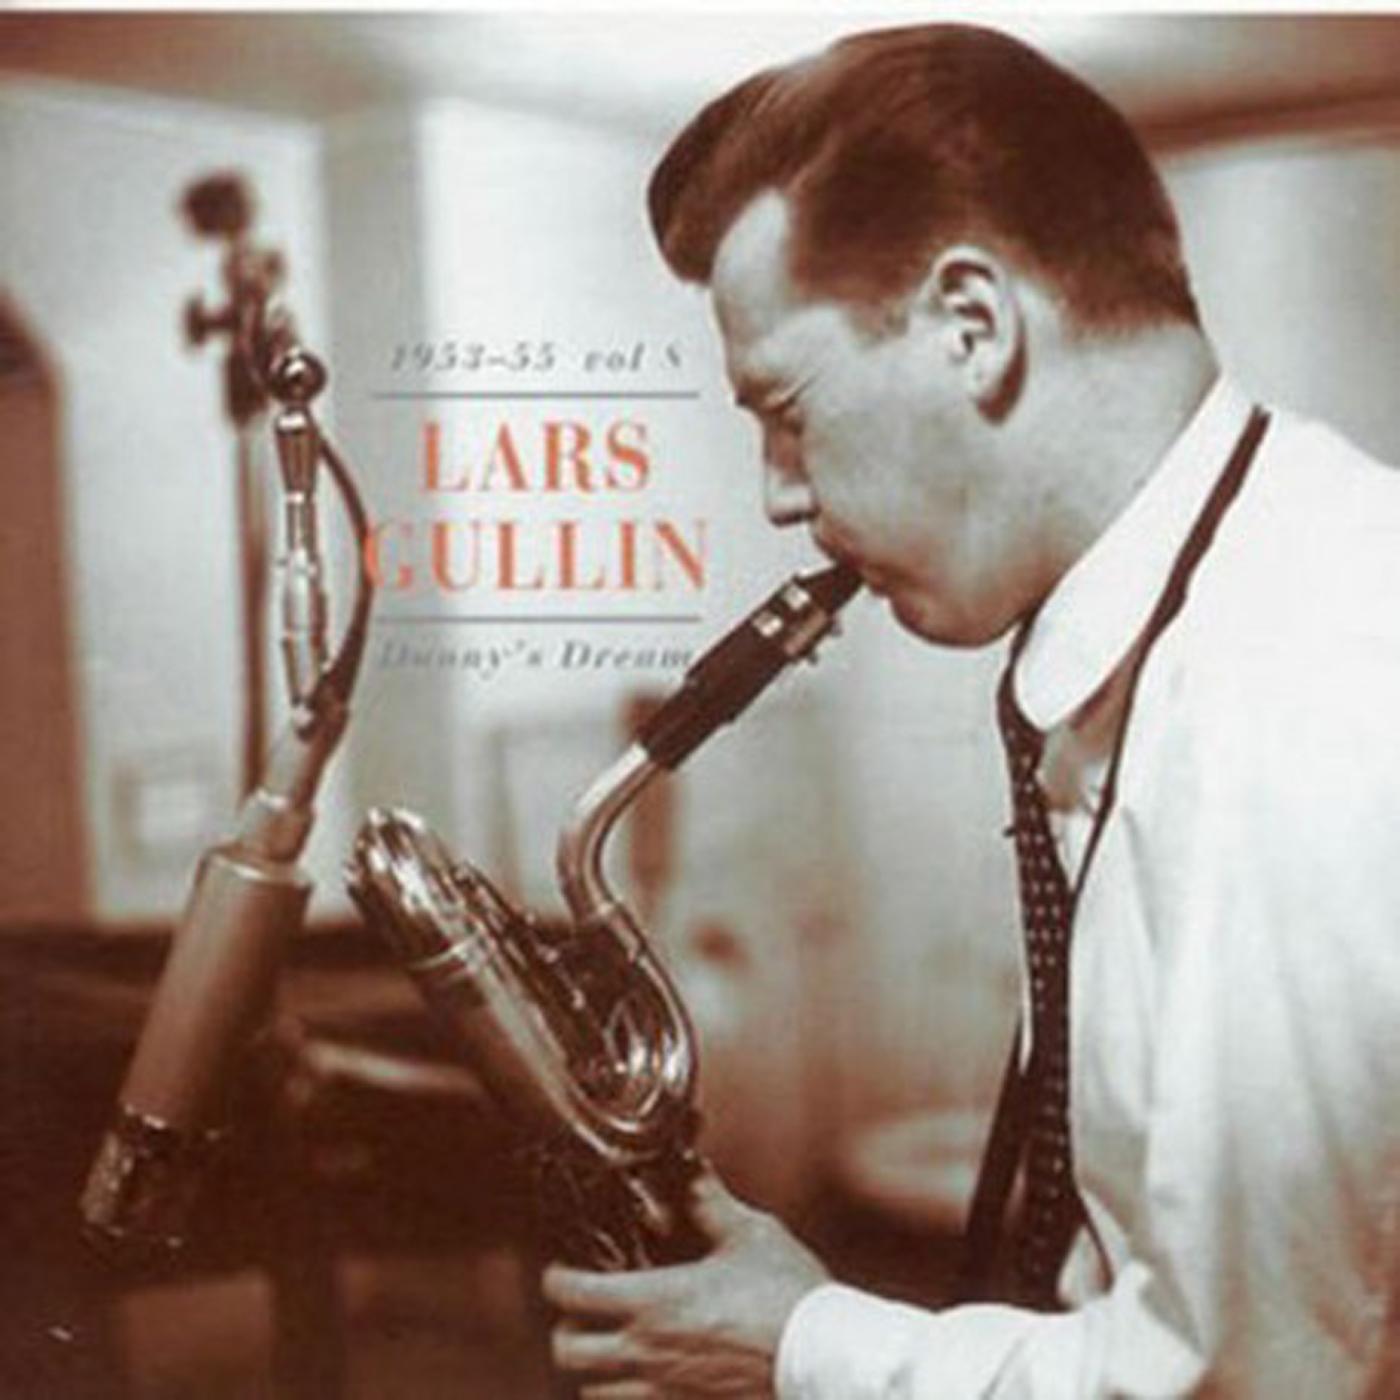 Lars Gullin | Danny's dream 1953-55 (Vol.8) | CD